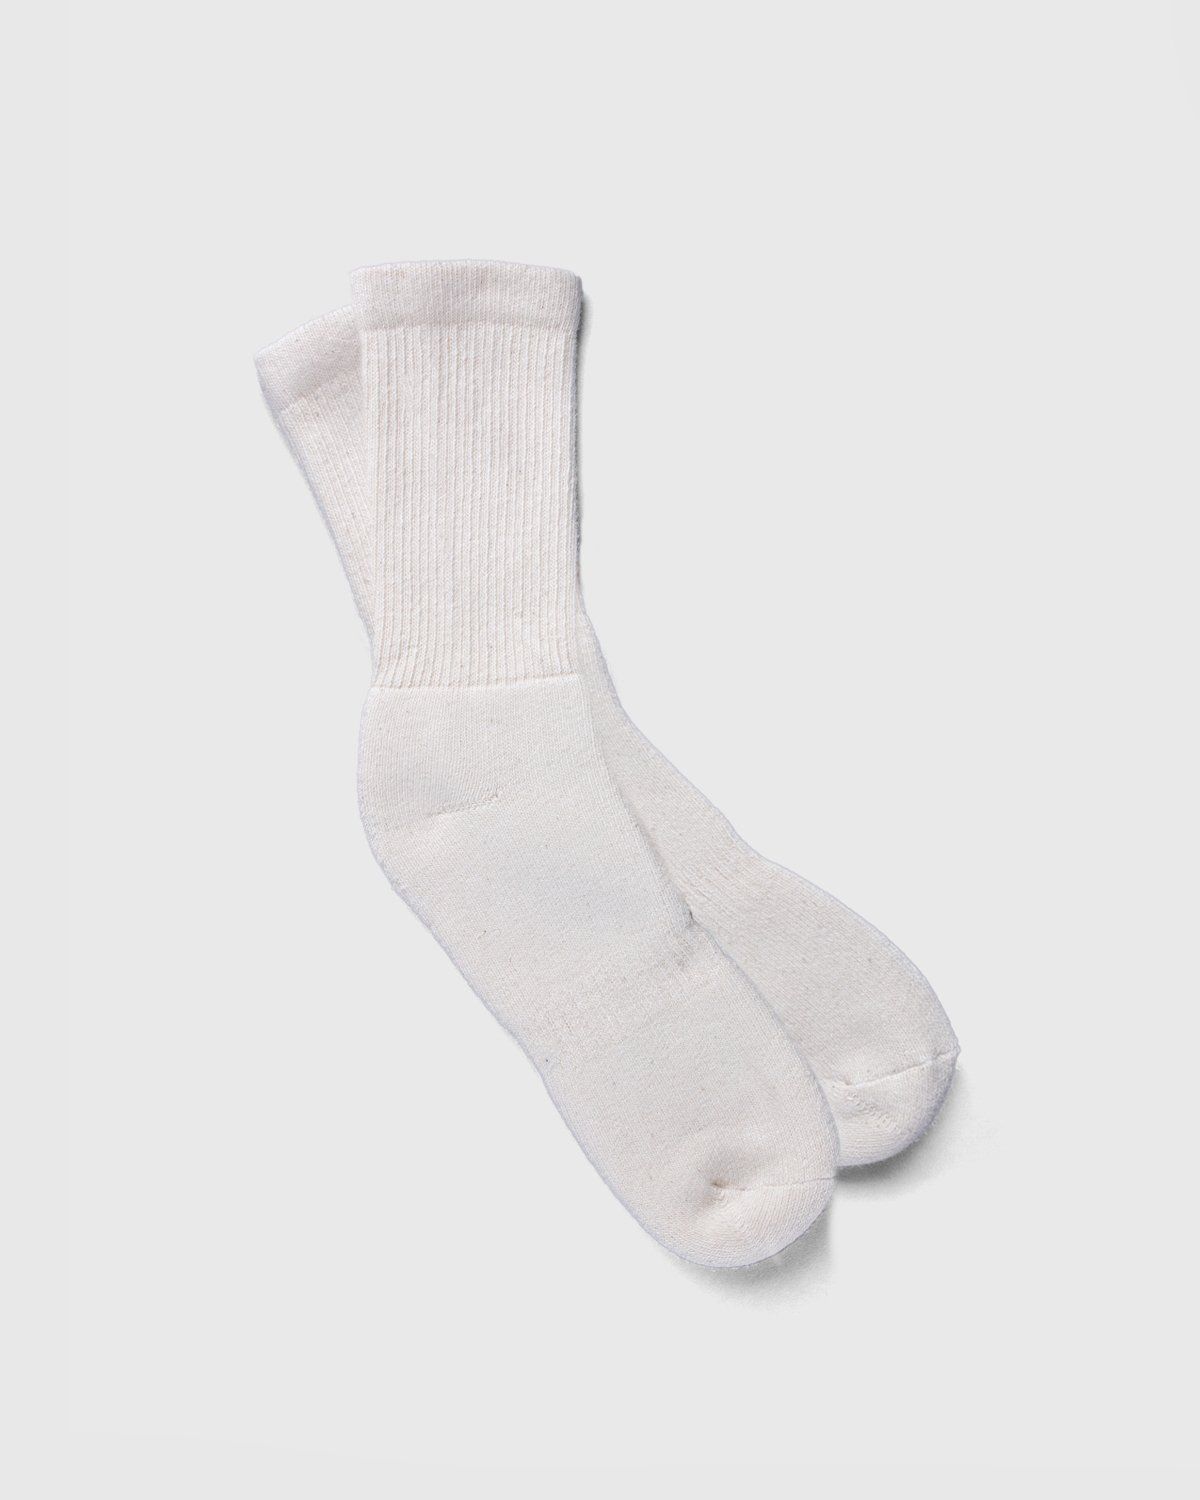 Darryl Brown – Sock Set Multicolour - Socks - Multi - Image 6